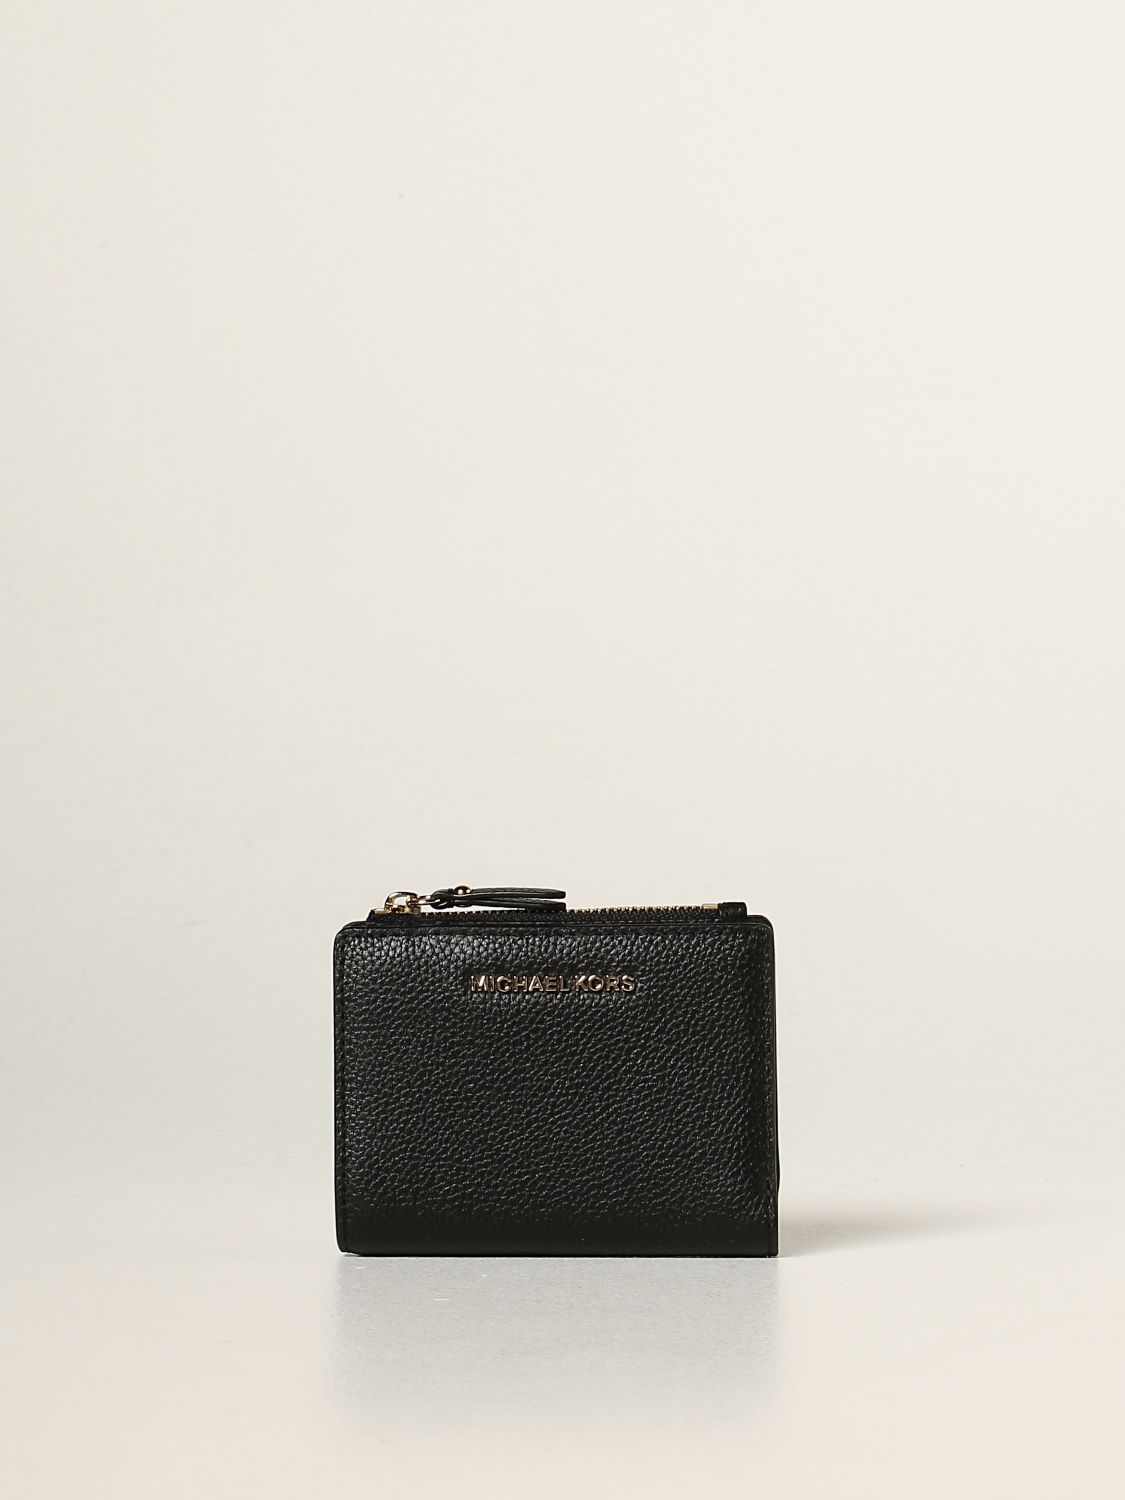 MICHAEL KORS: Michael wallet in grained leather - Black | Michael Kors ...